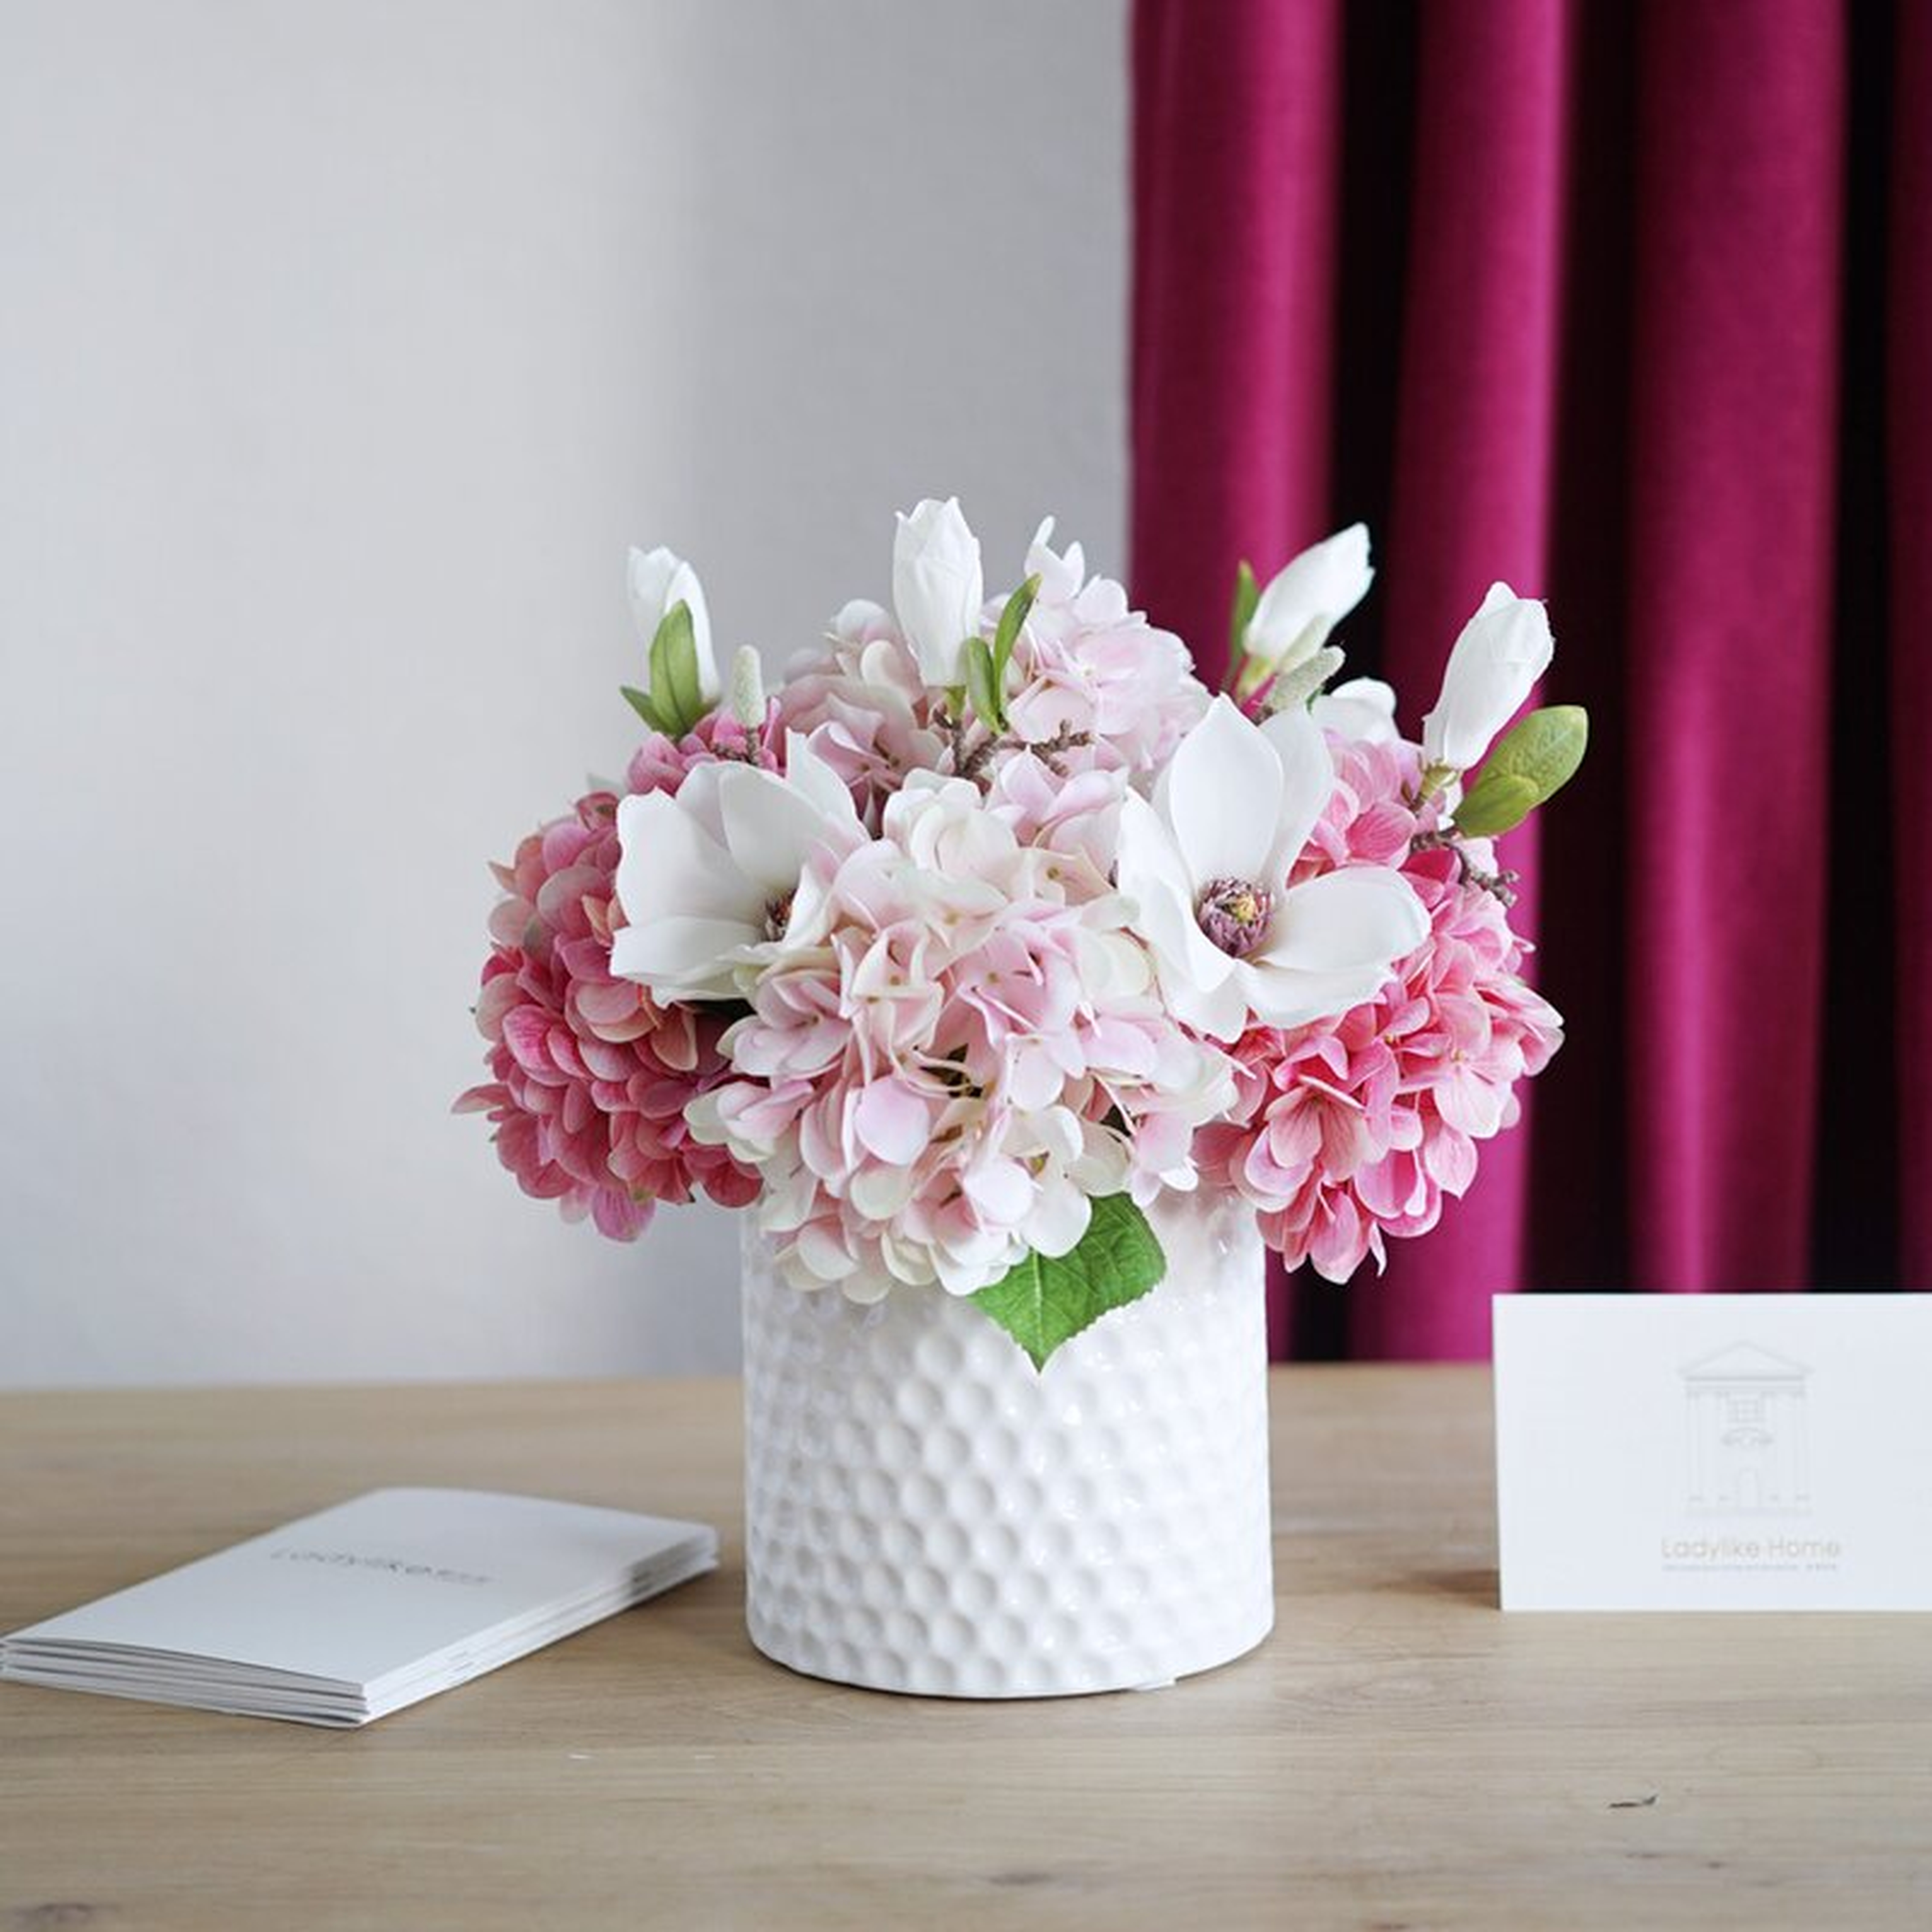 Faux Hydrangea and Magnolia Floral Arrangement in Ceramic Vase - Wayfair